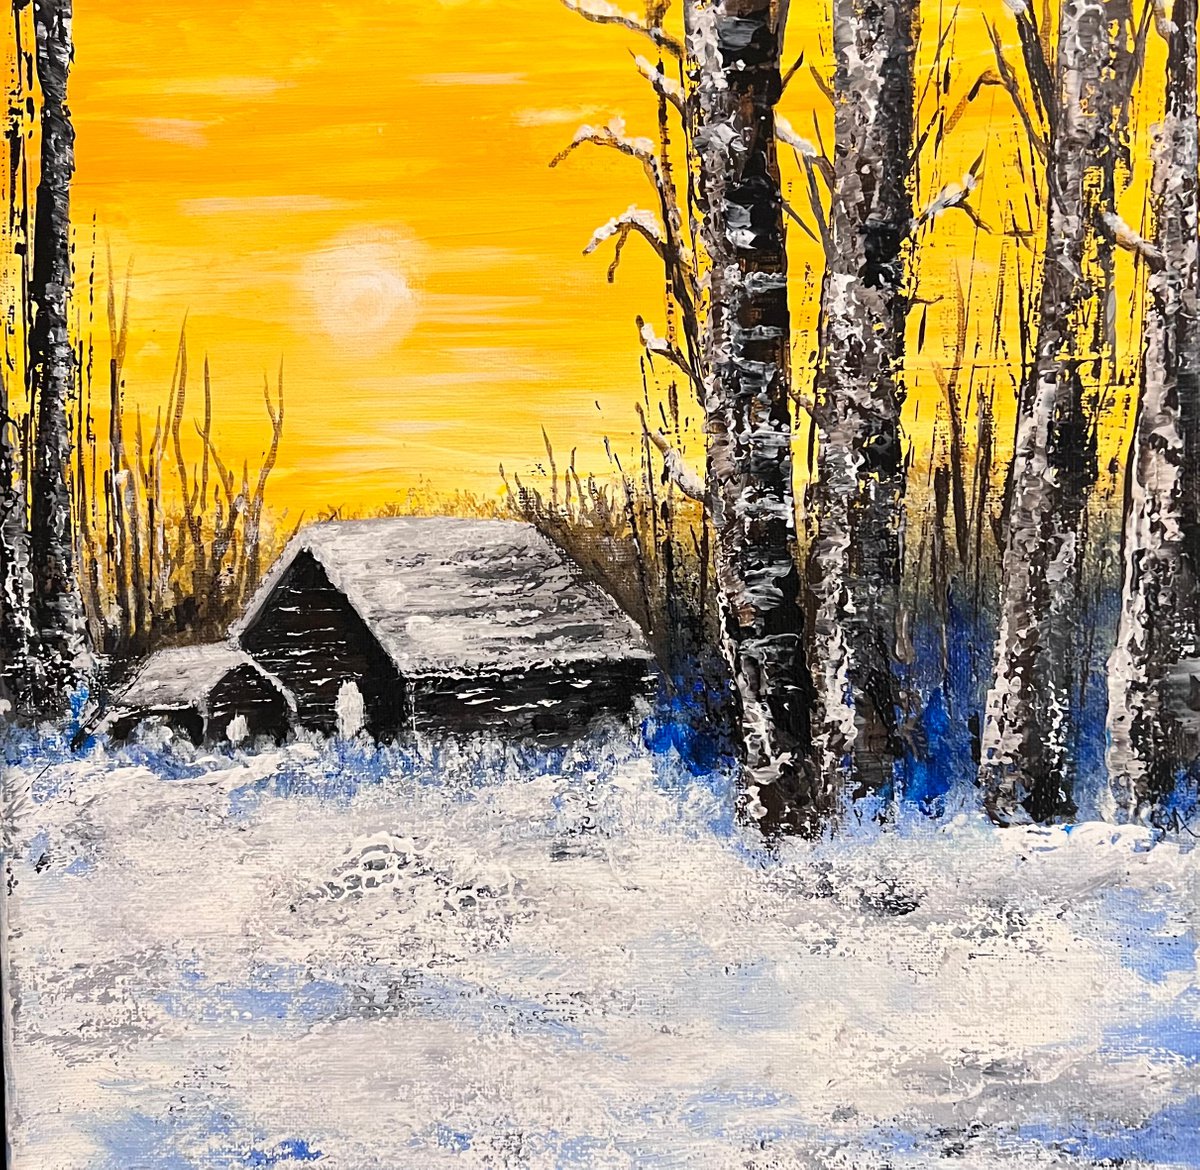 Sunset cabin by Carolyn Shoemaker (Soma)